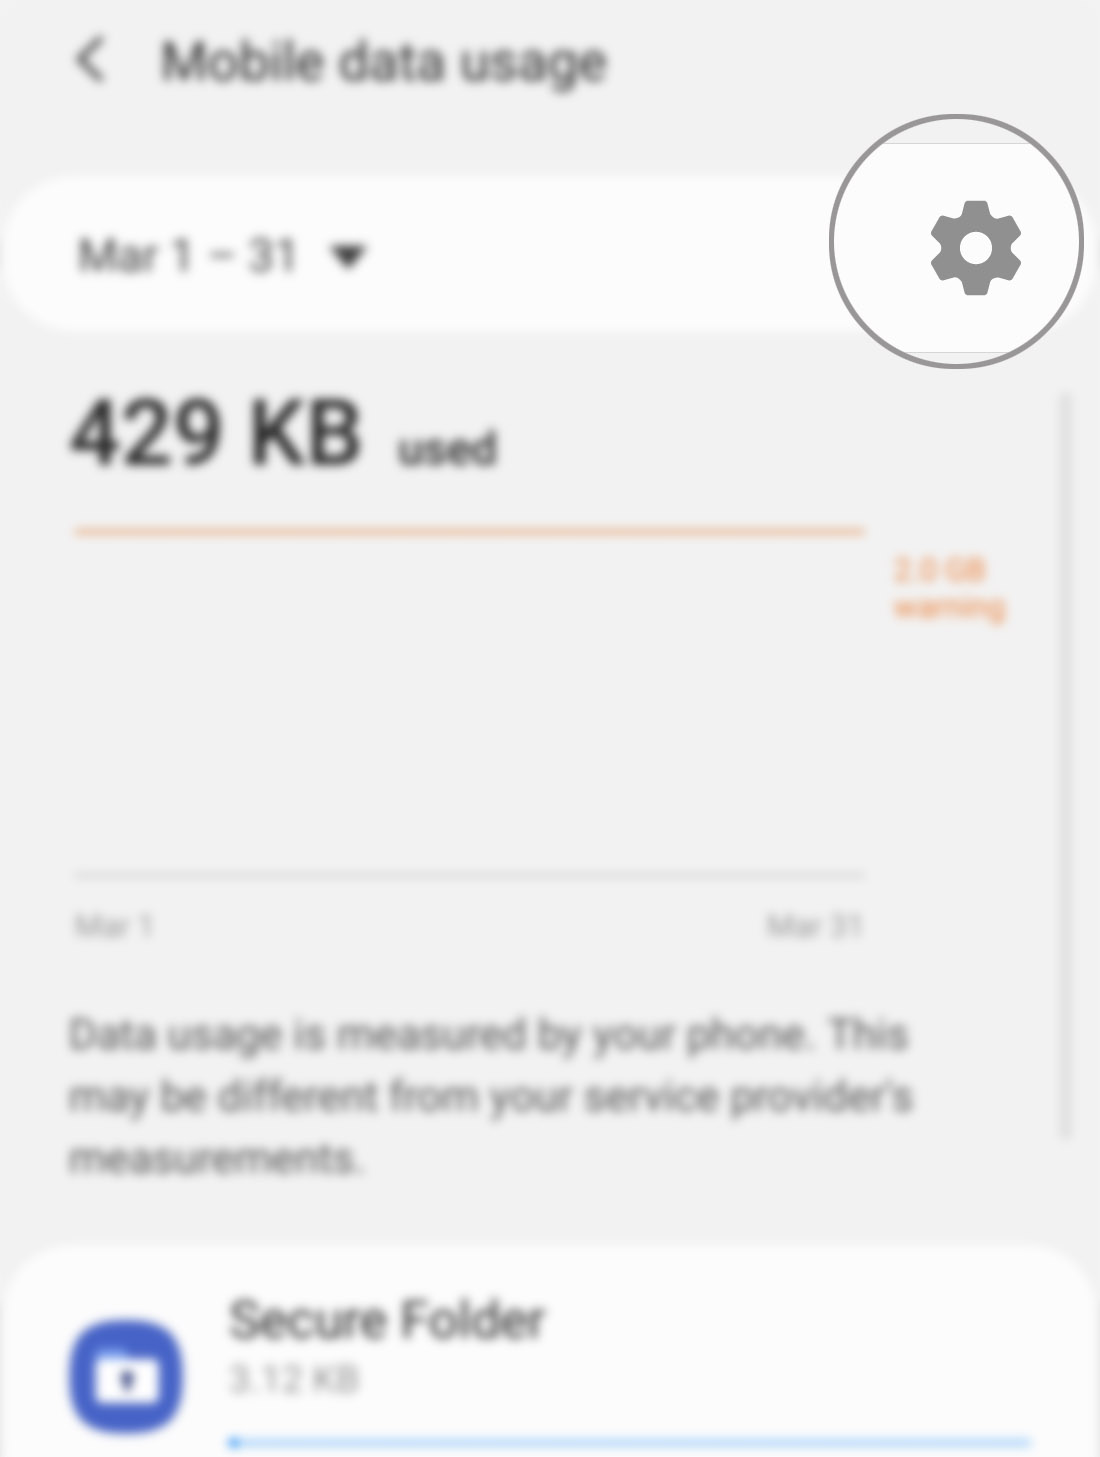 manage data usage galaxy s20 - mobile data usage settings